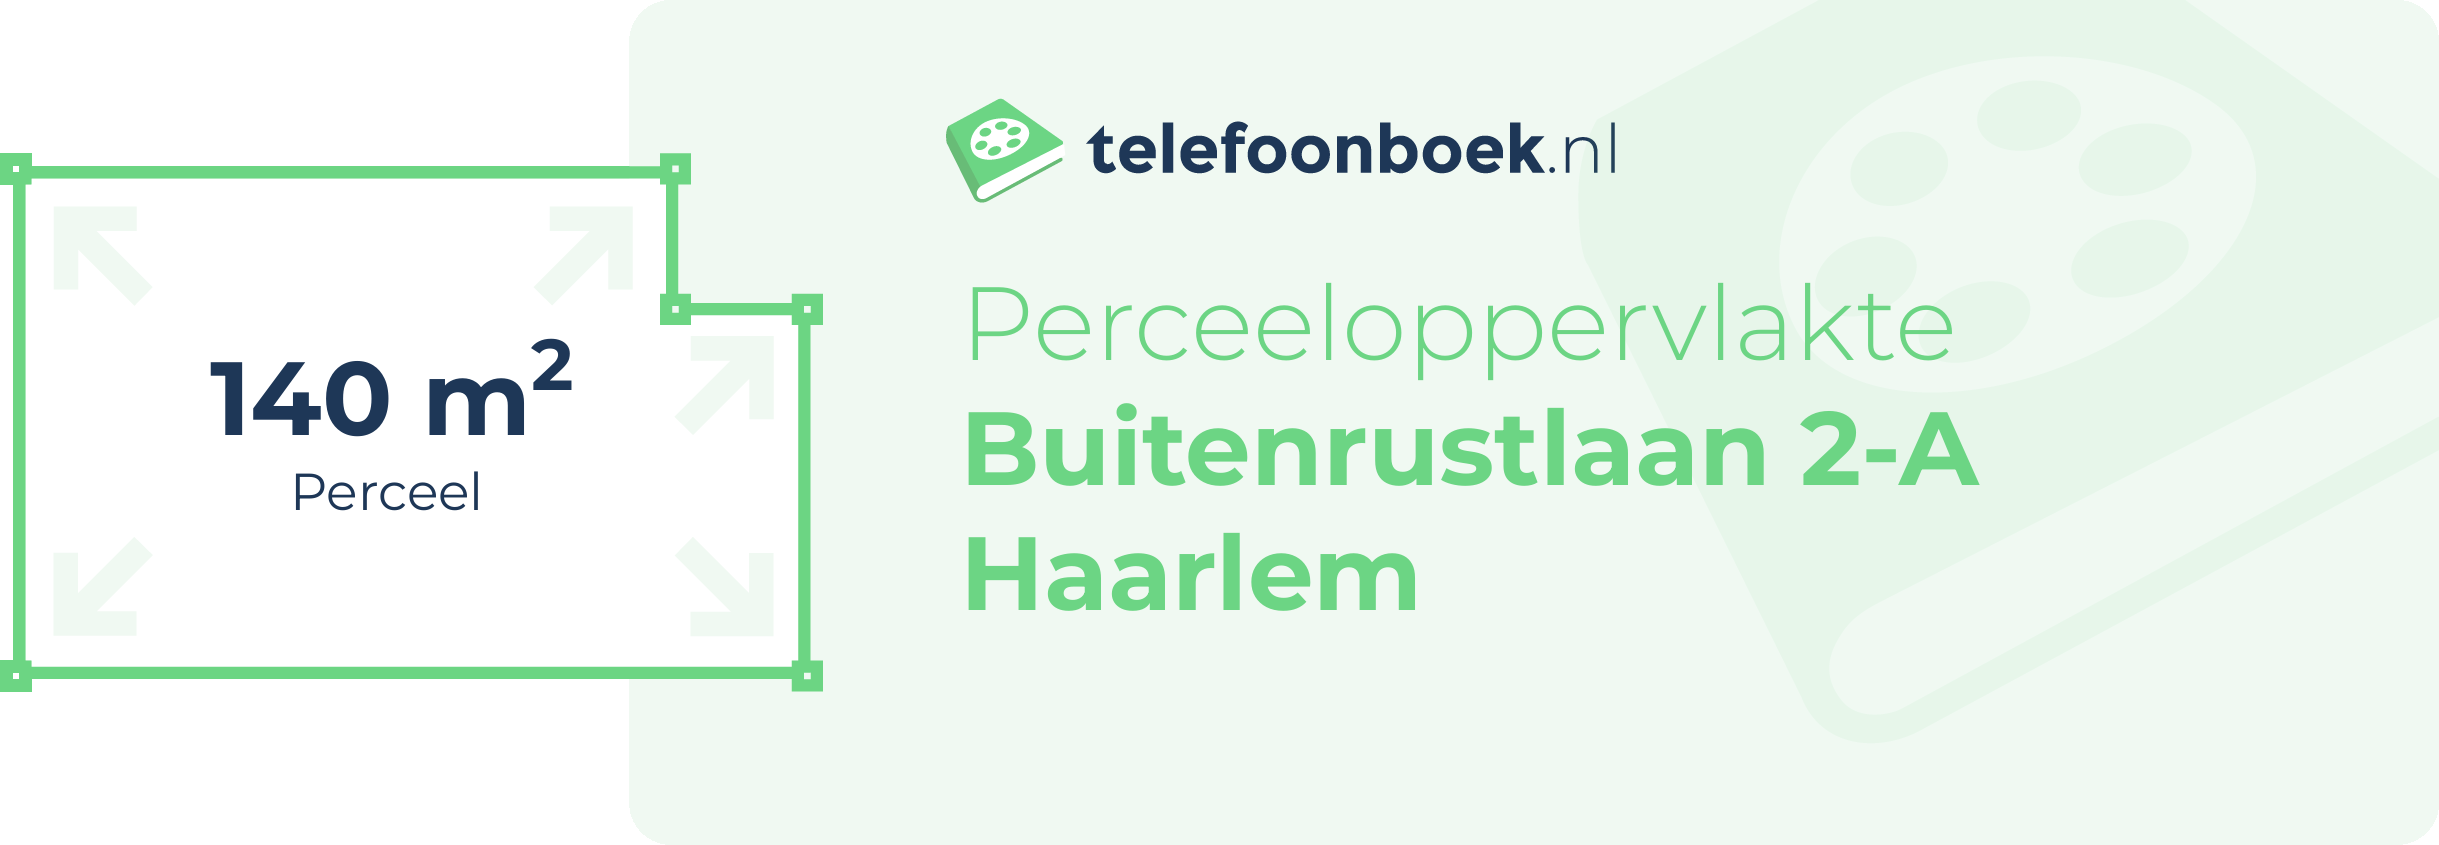 Perceeloppervlakte Buitenrustlaan 2-A Haarlem